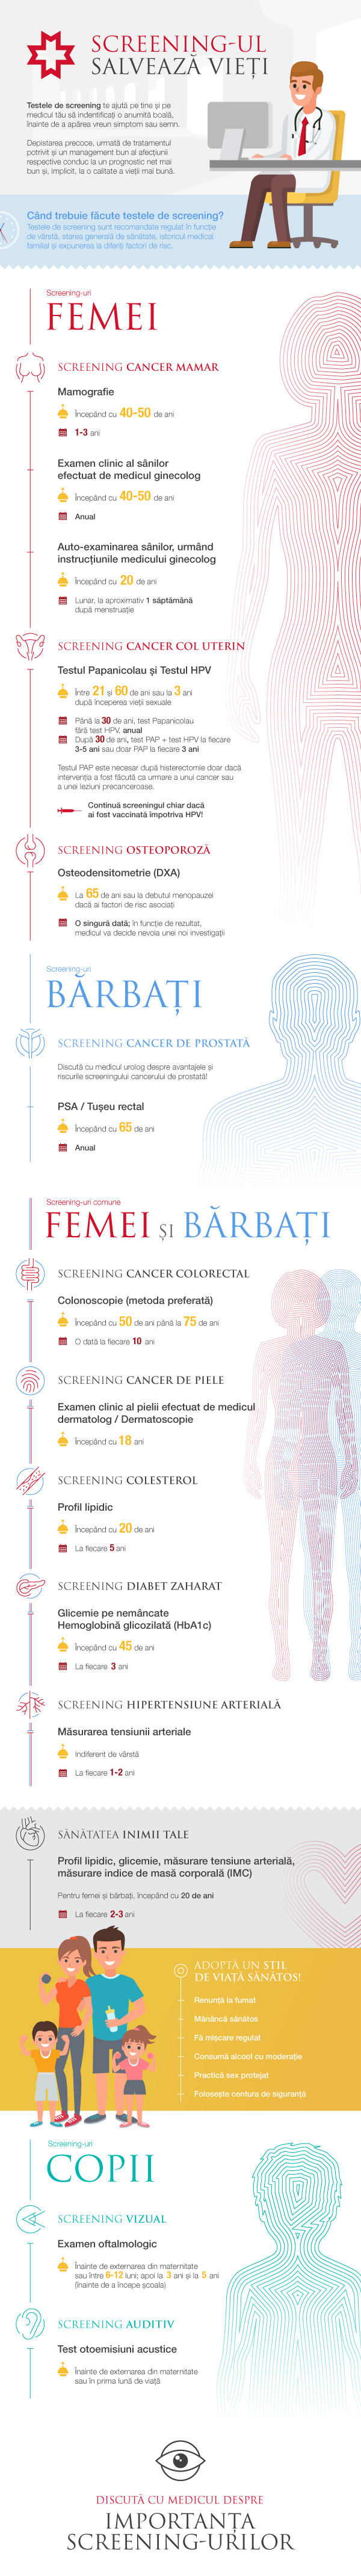 Screening-ul salveaza vieti (infografic)